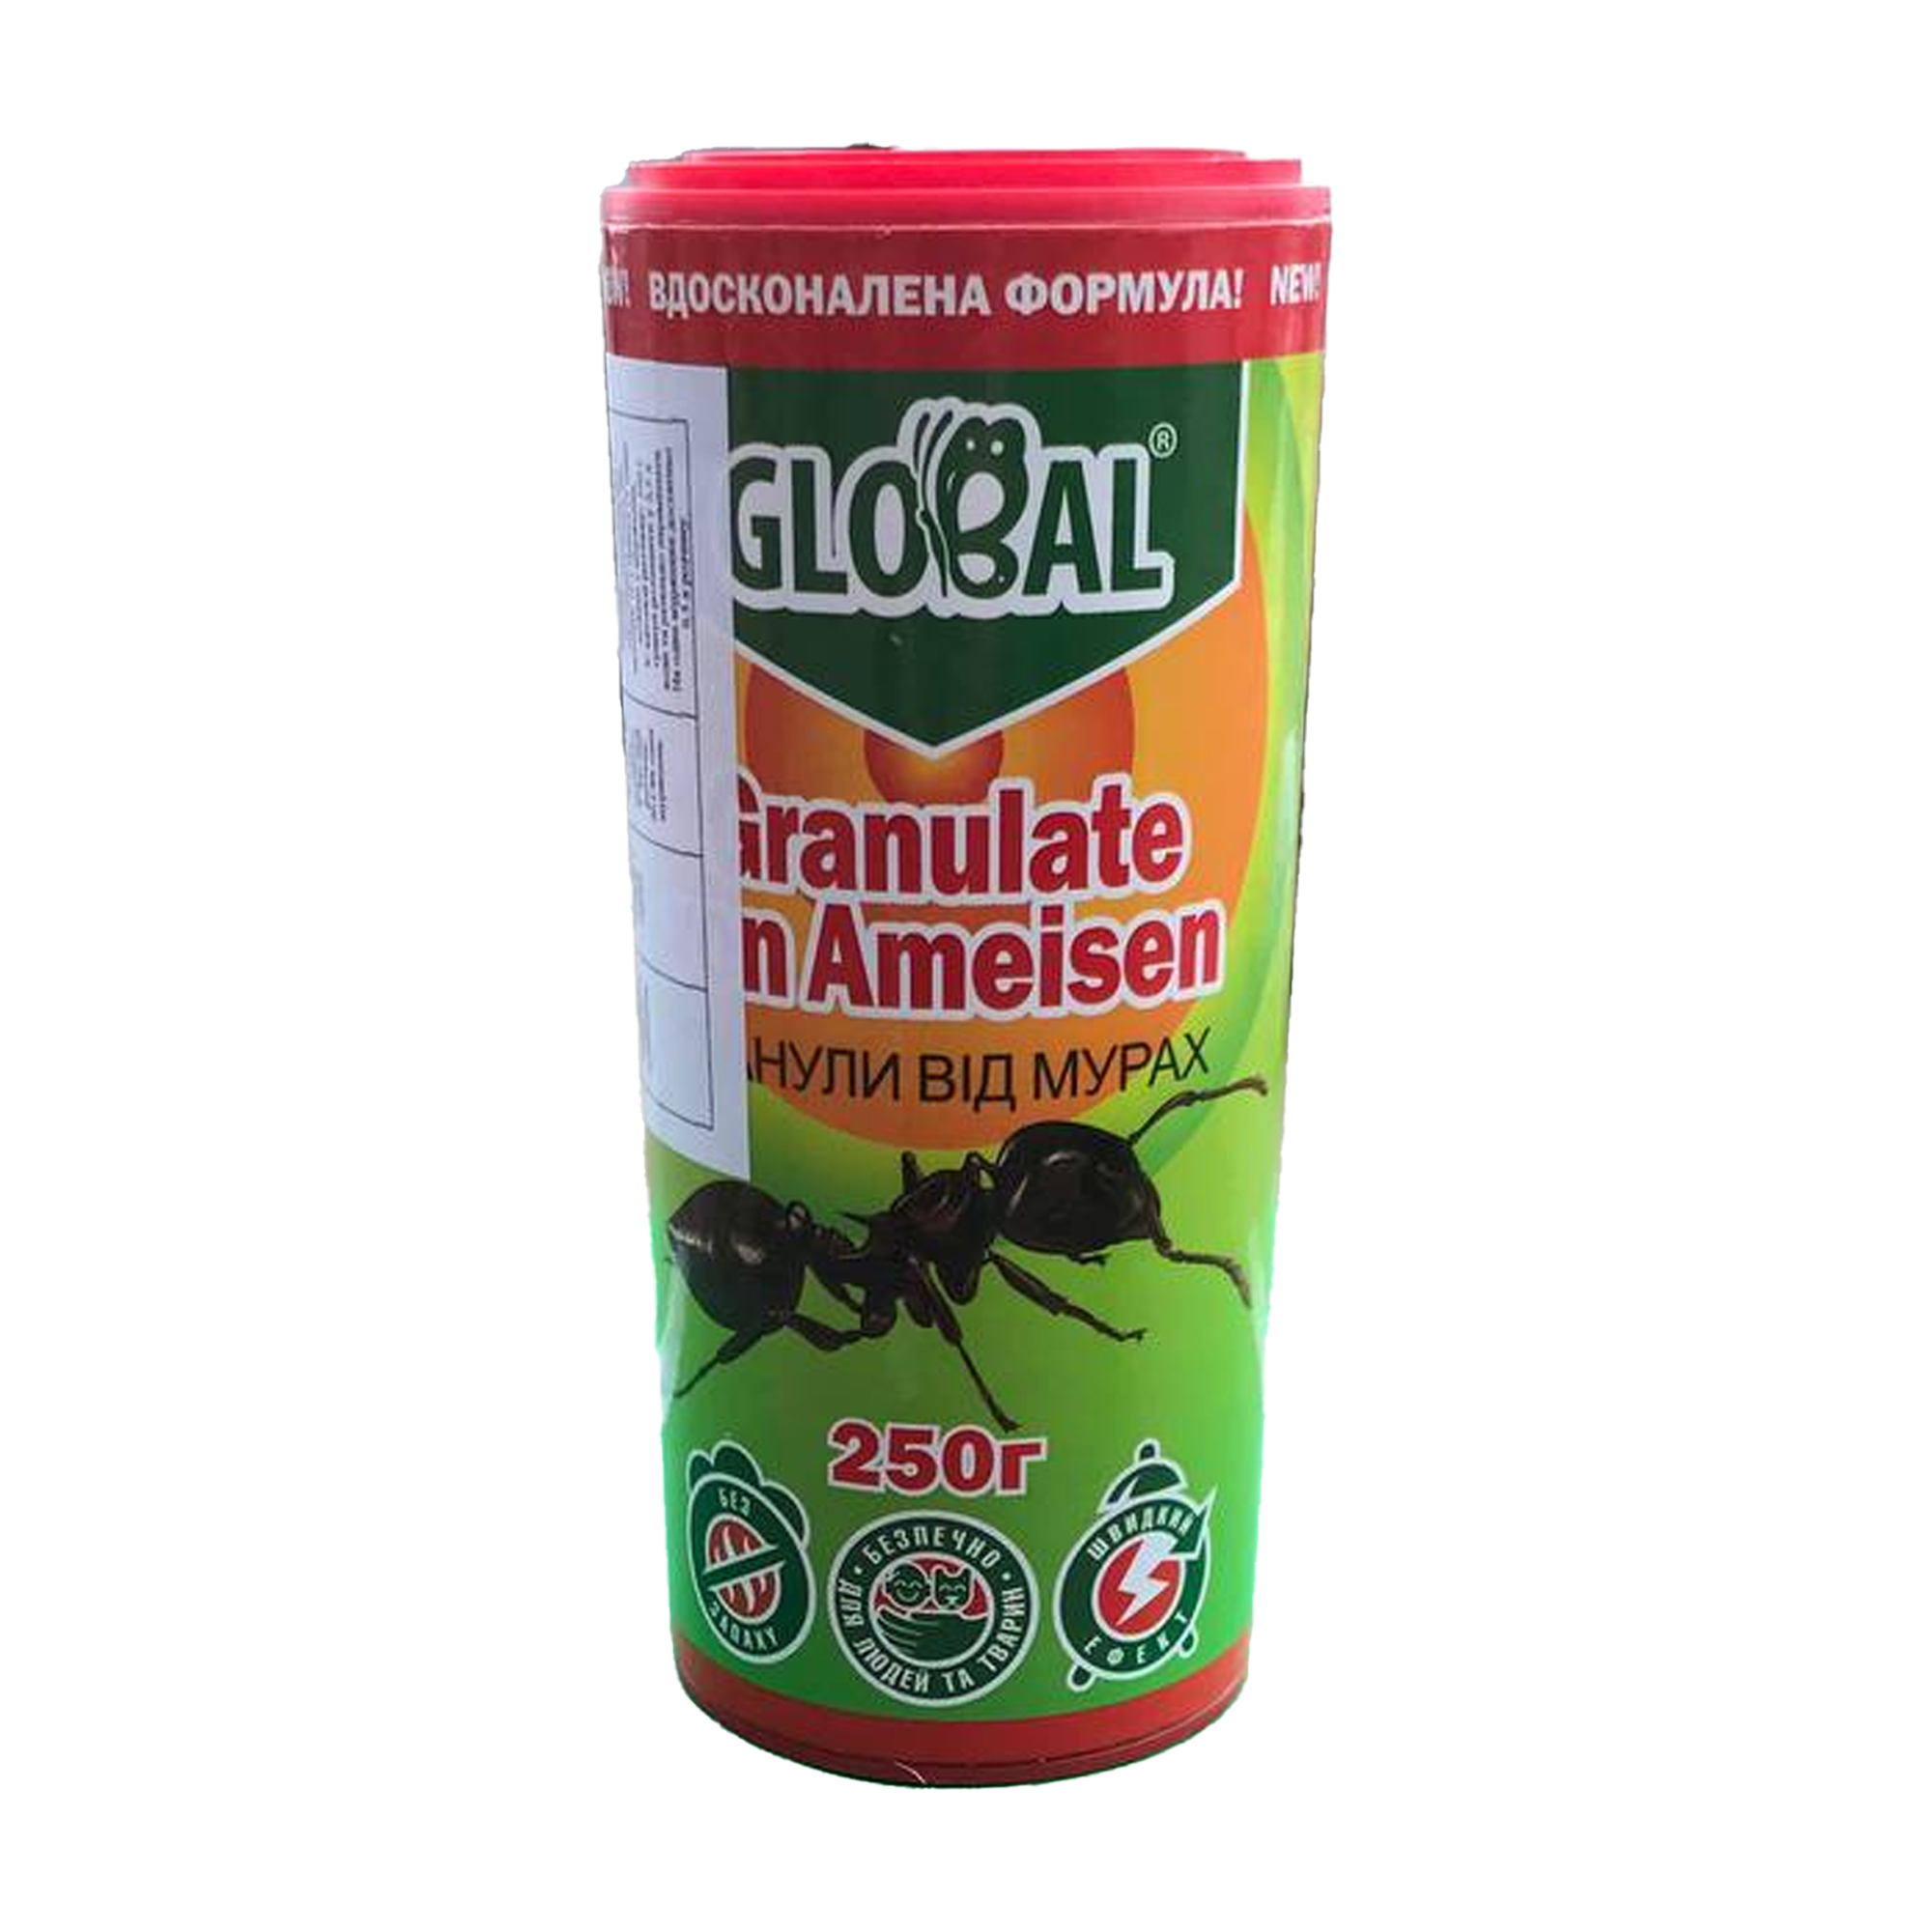 Средство инсектицидное Global гранулы от муравьев 250 г